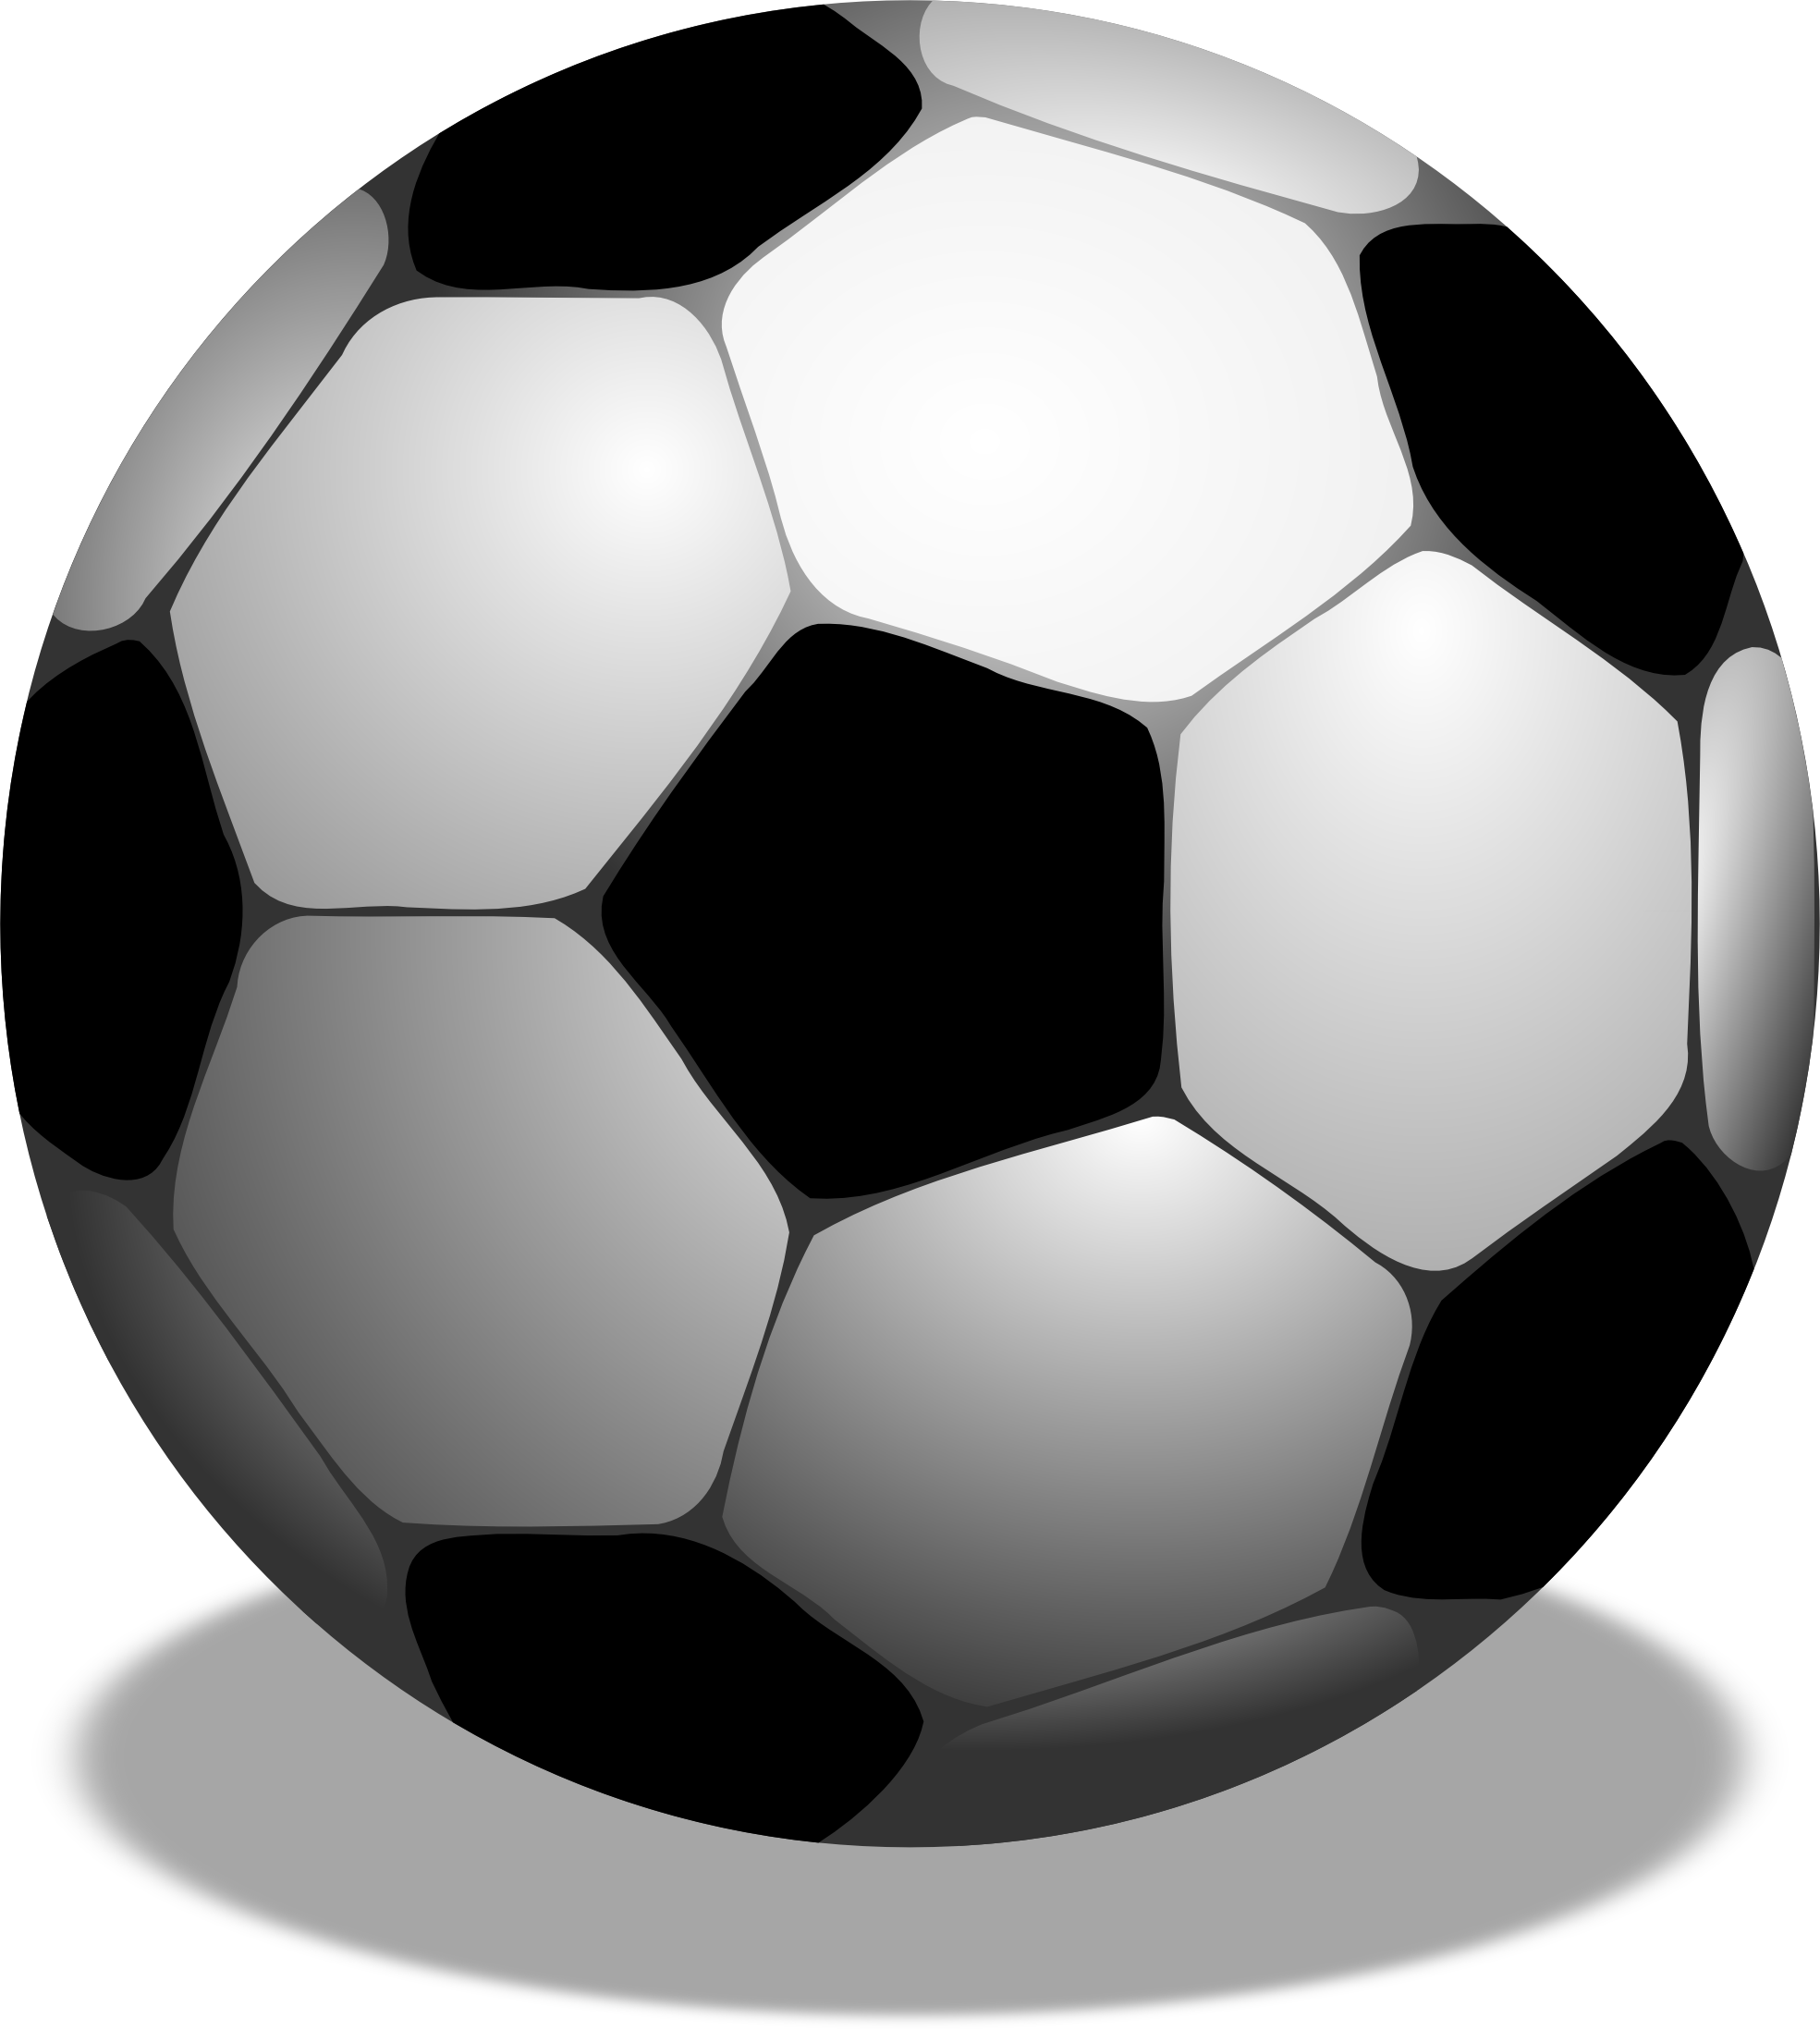 soccer ball transparent background